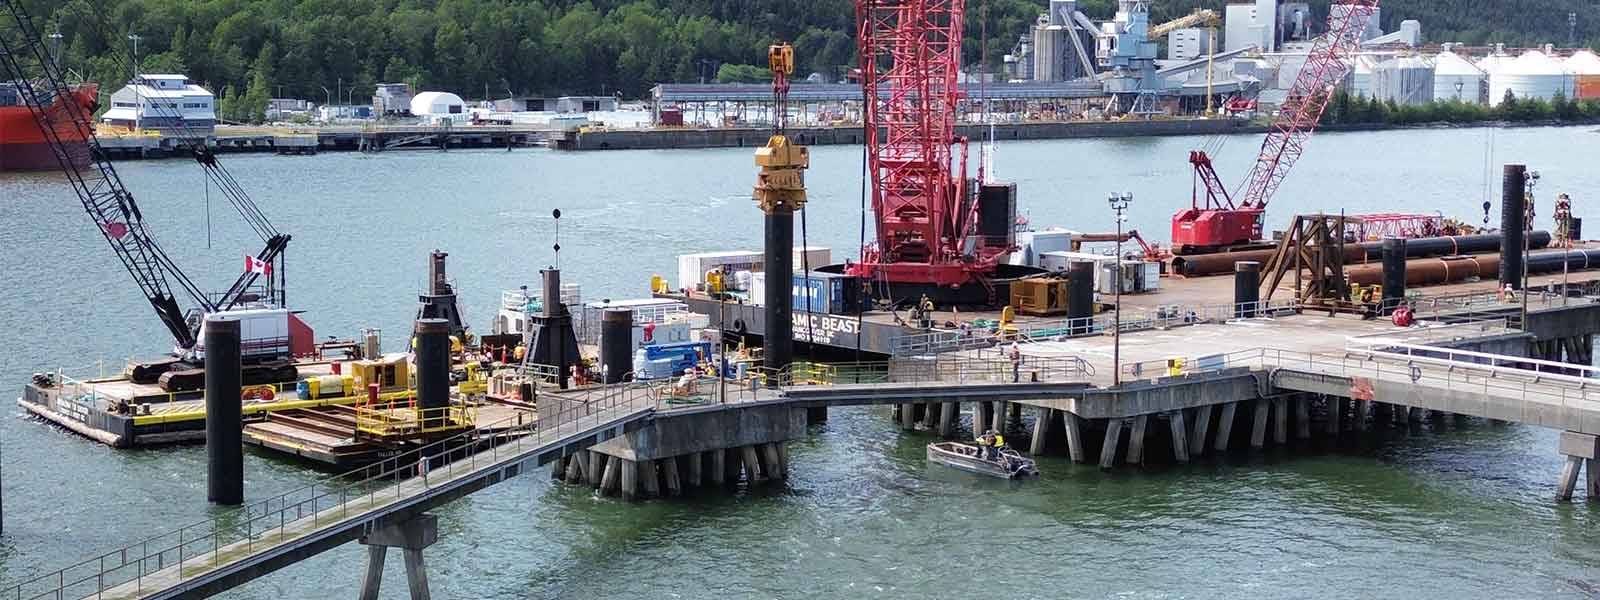 Bridgemans drives LNG Canada tug berth forward in partnership with First Nations